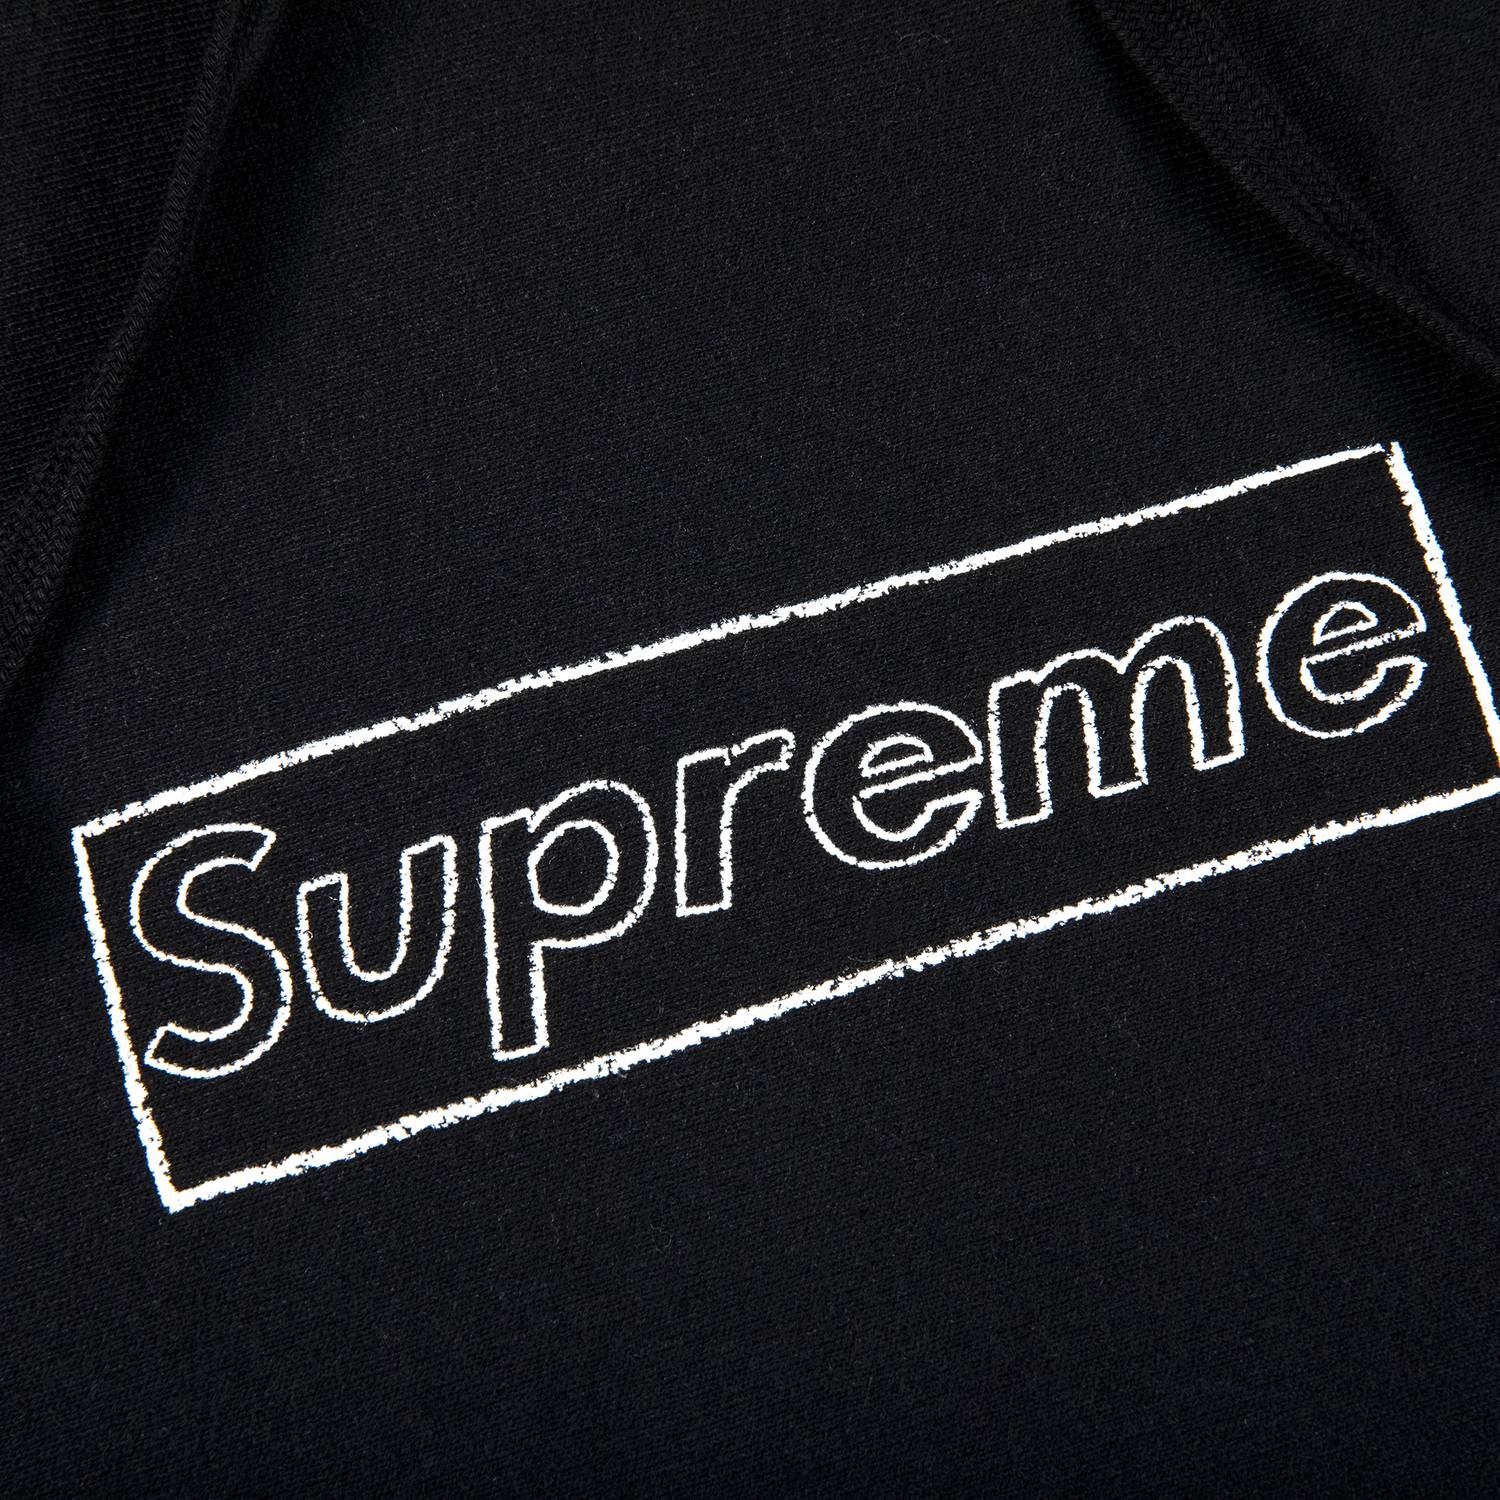 SUPREME X KAWS Chalk Logo Hooded Sweatshirt Black SS21 | ORIGINALFOOK